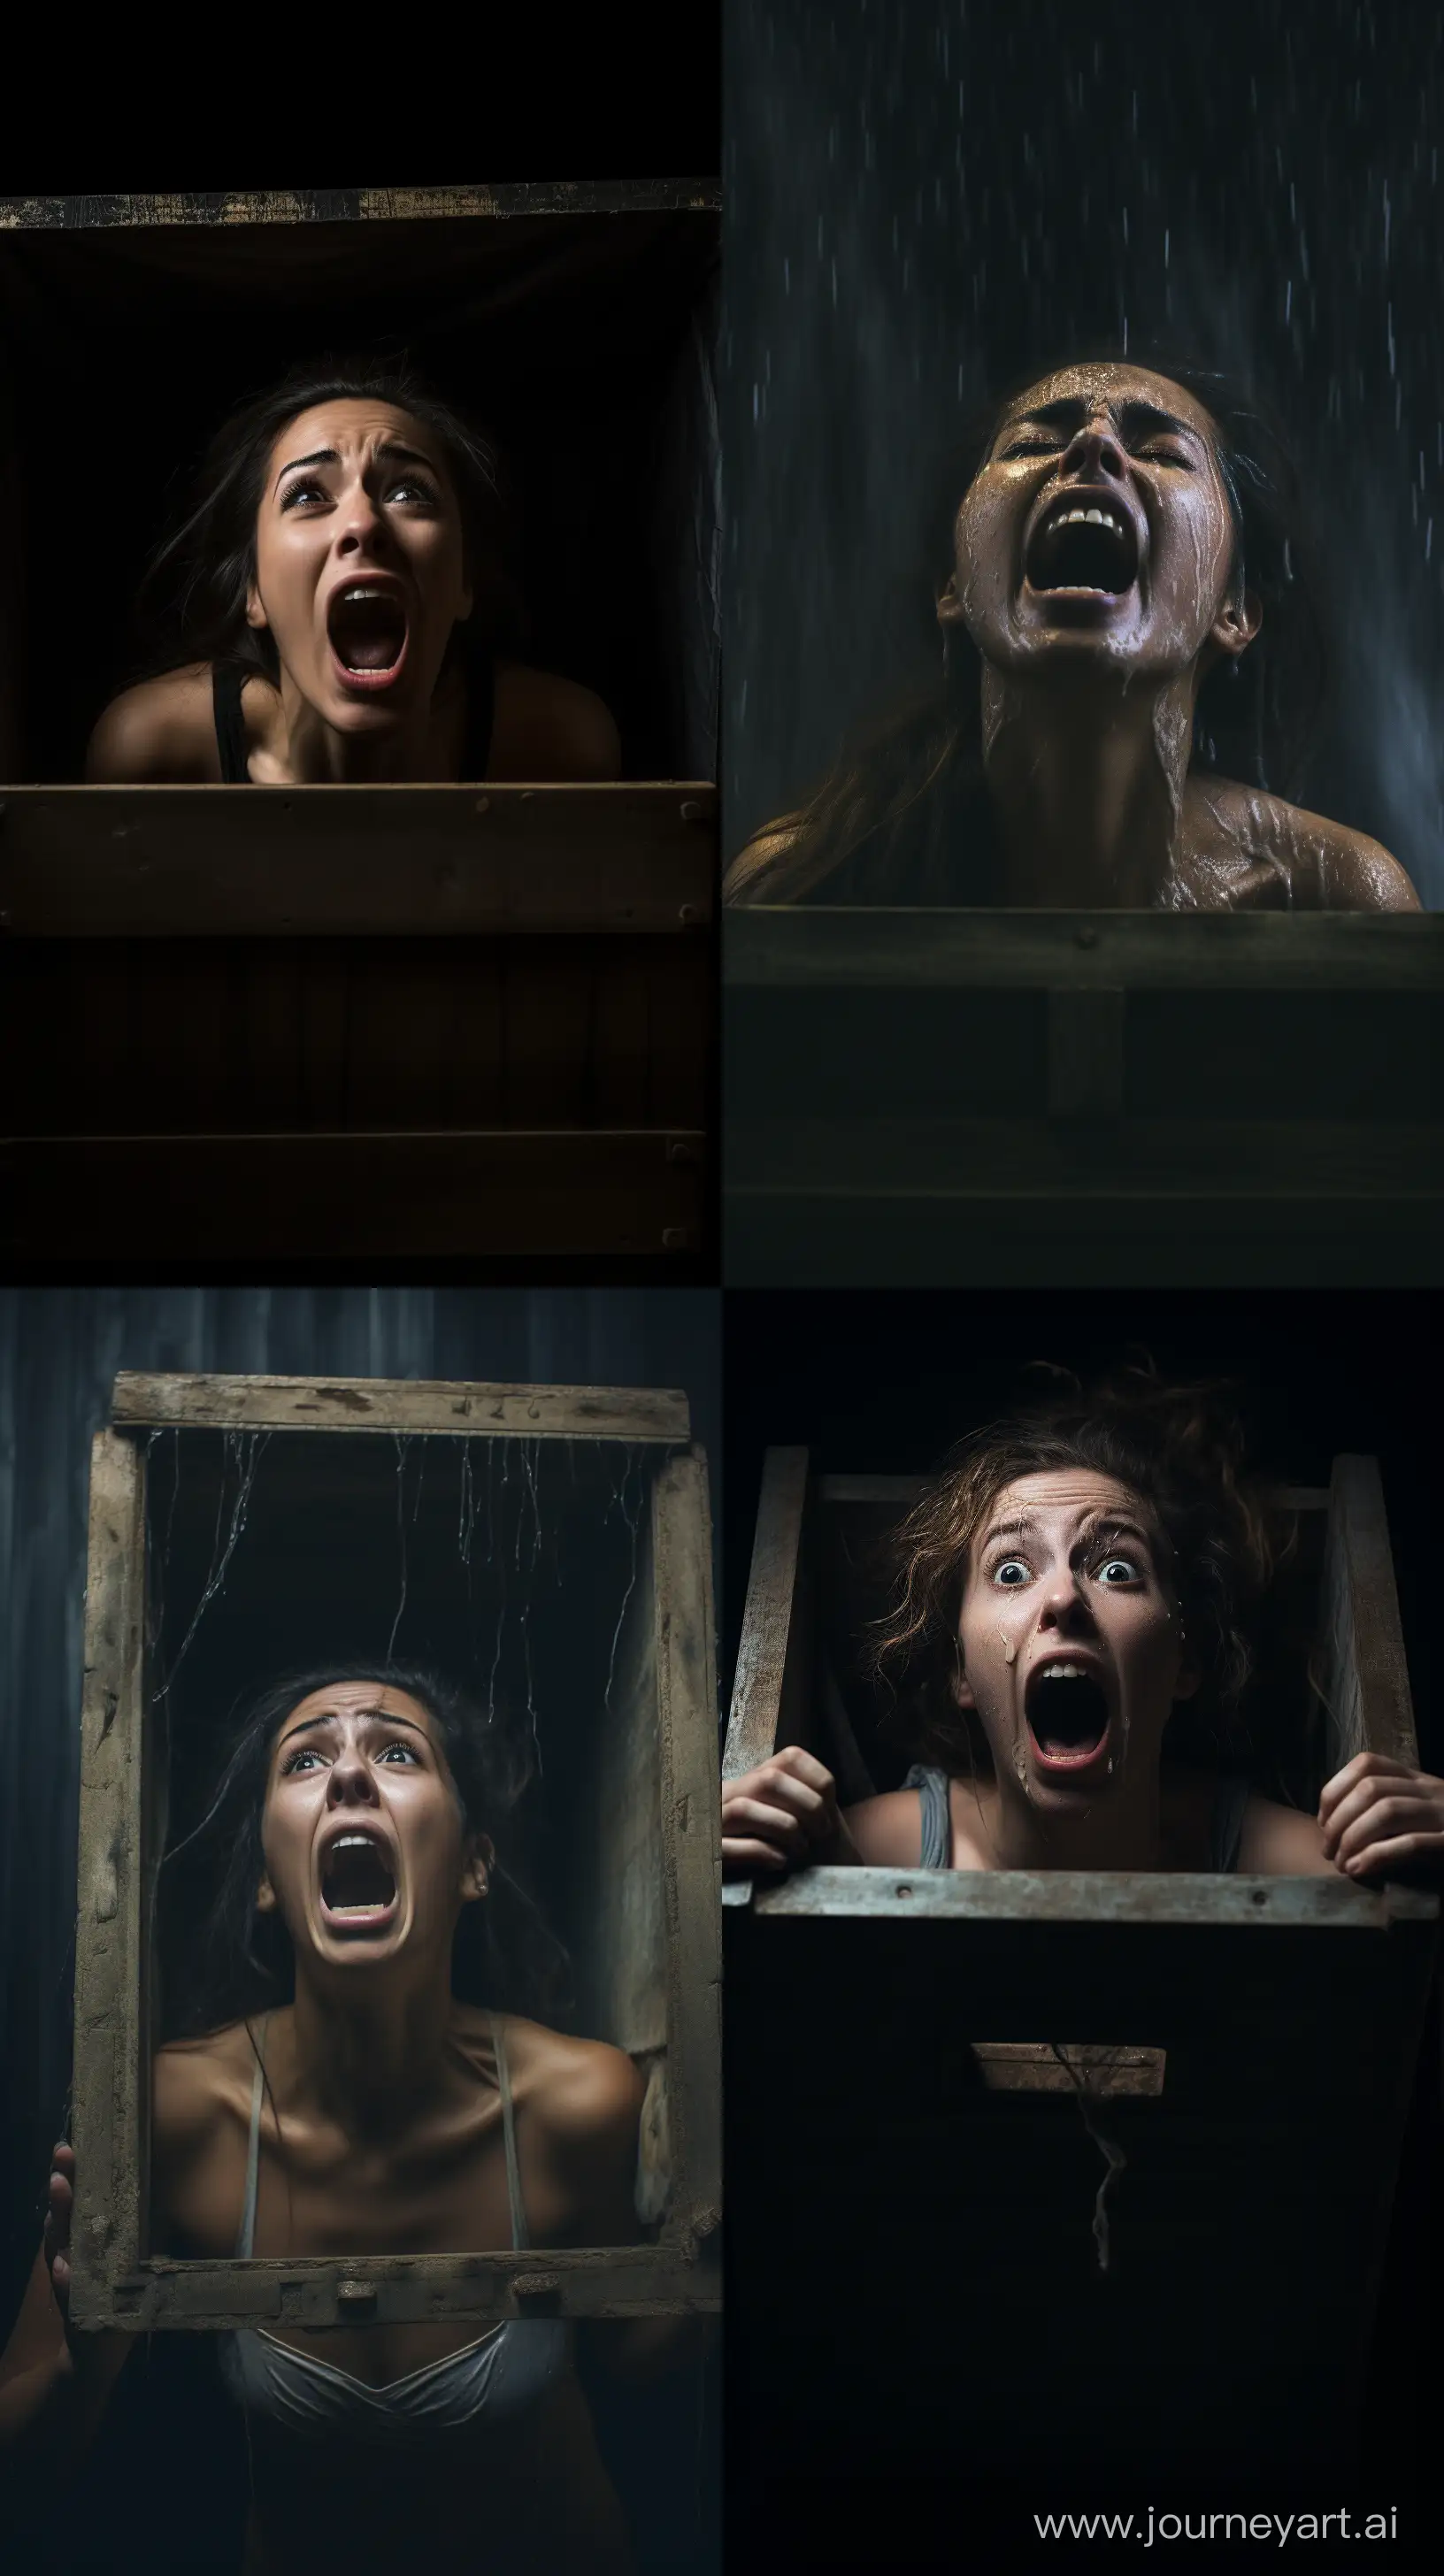 Fearful-Woman-in-CoffinLike-Box-AwardWinning-Emotional-Photography